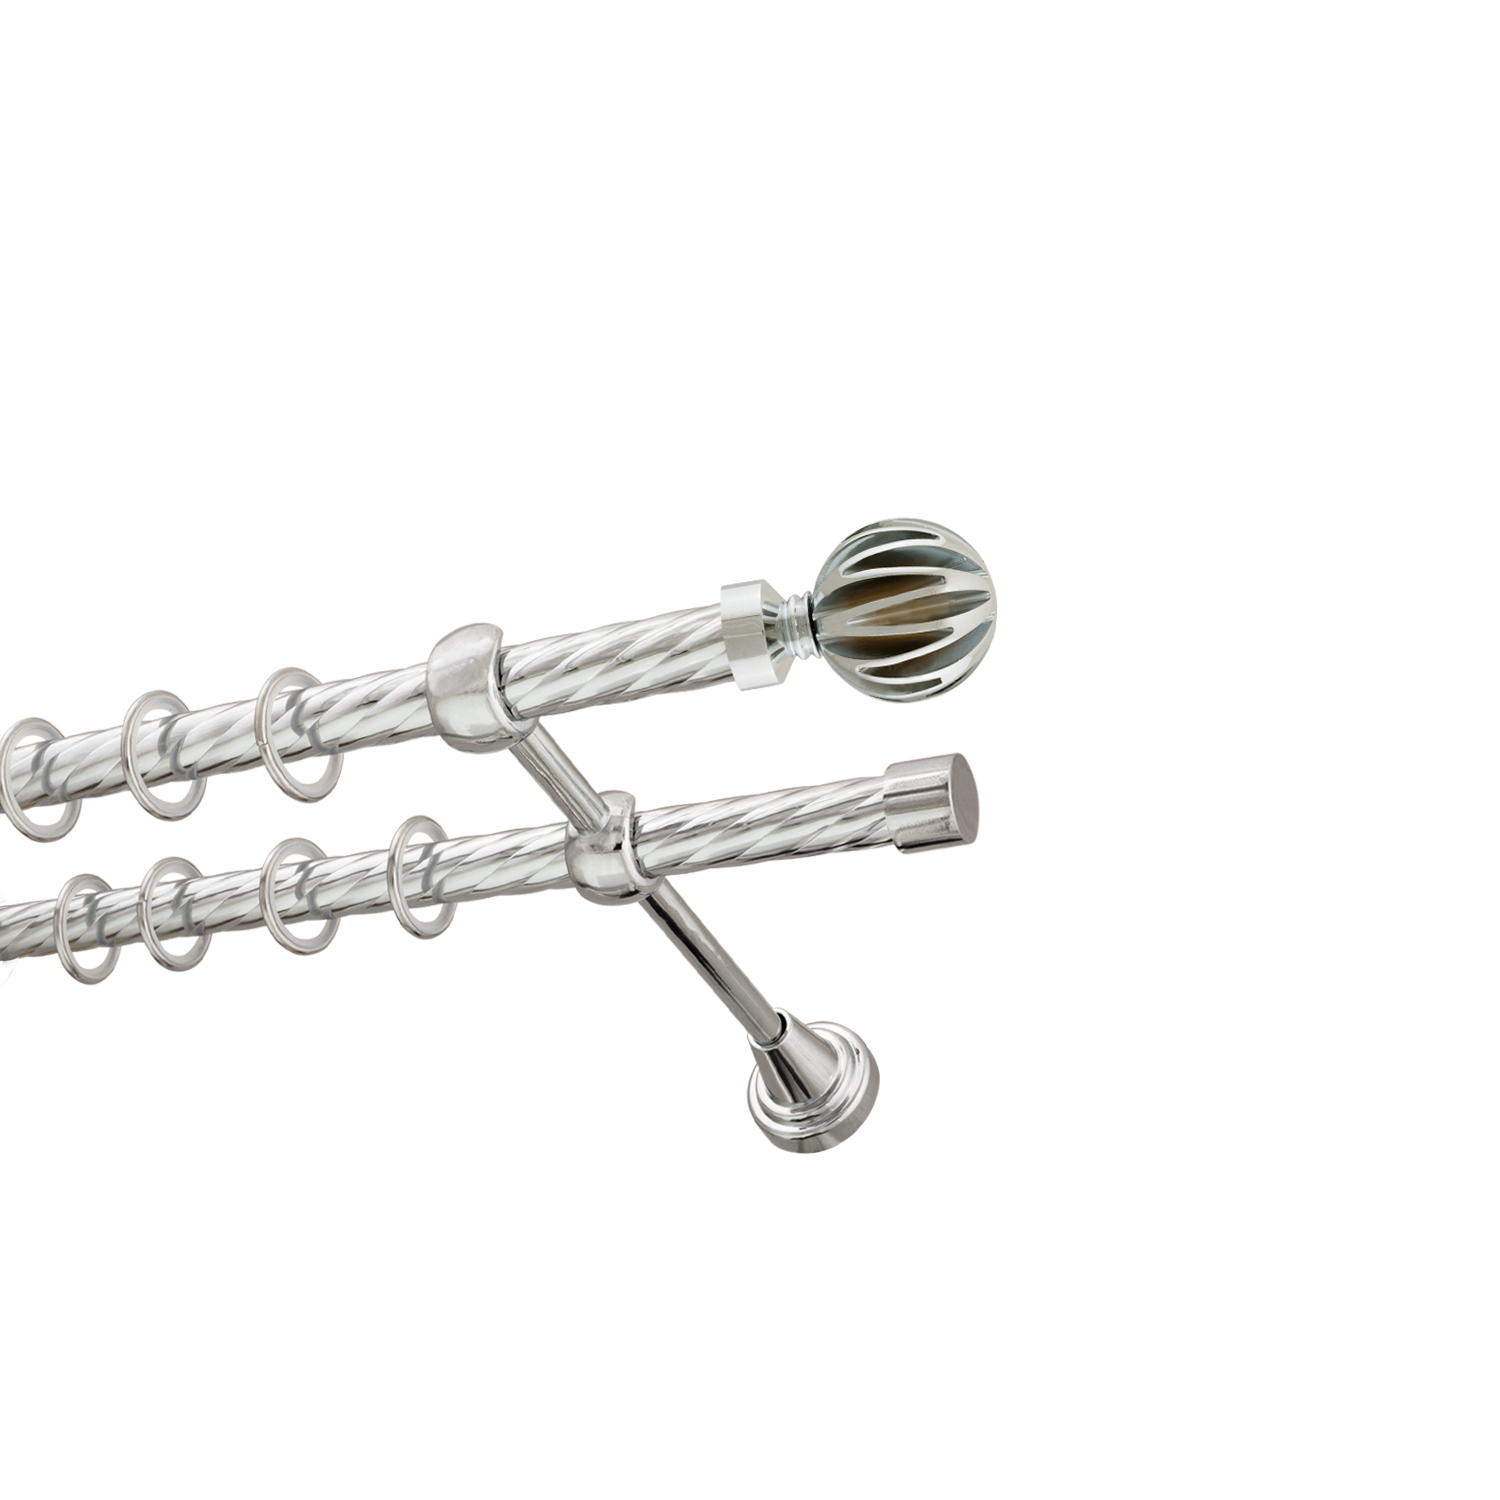 Металлический карниз для штор Шафран, двухрядный 16/16 мм, серебро, витая штанга, длина 140 см - фото Wikidecor.ru